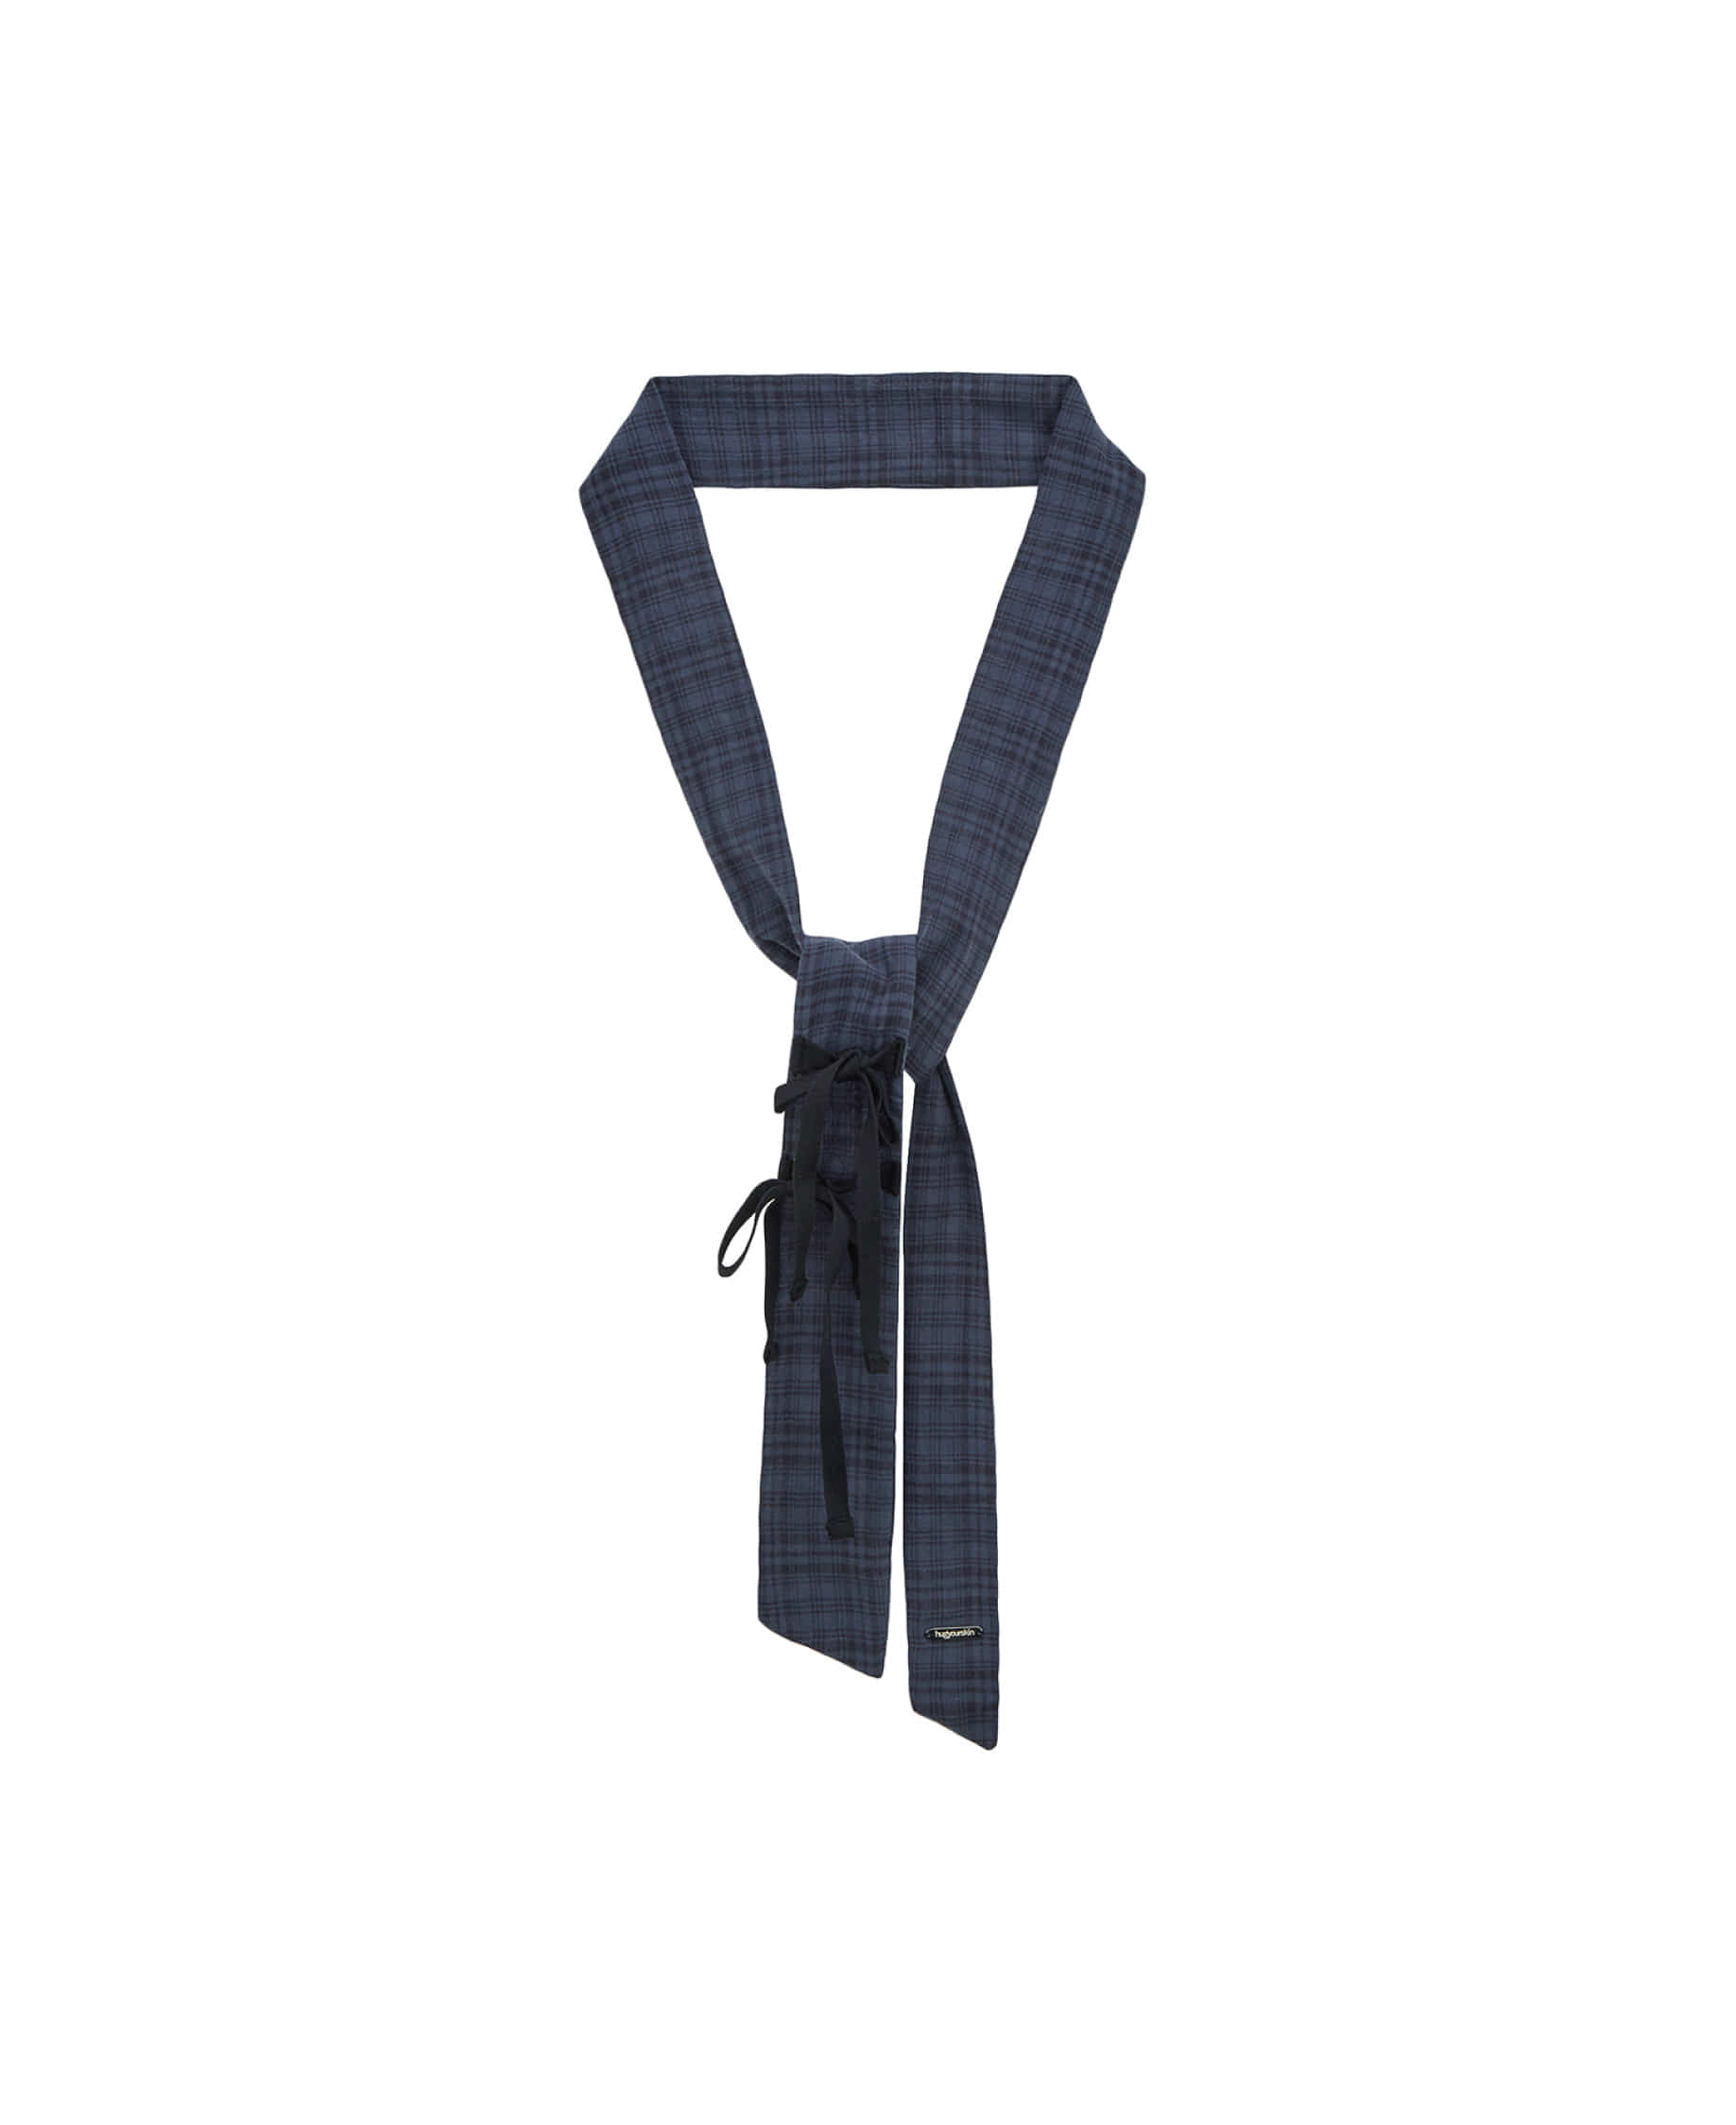 Ribbon check tie (navy)